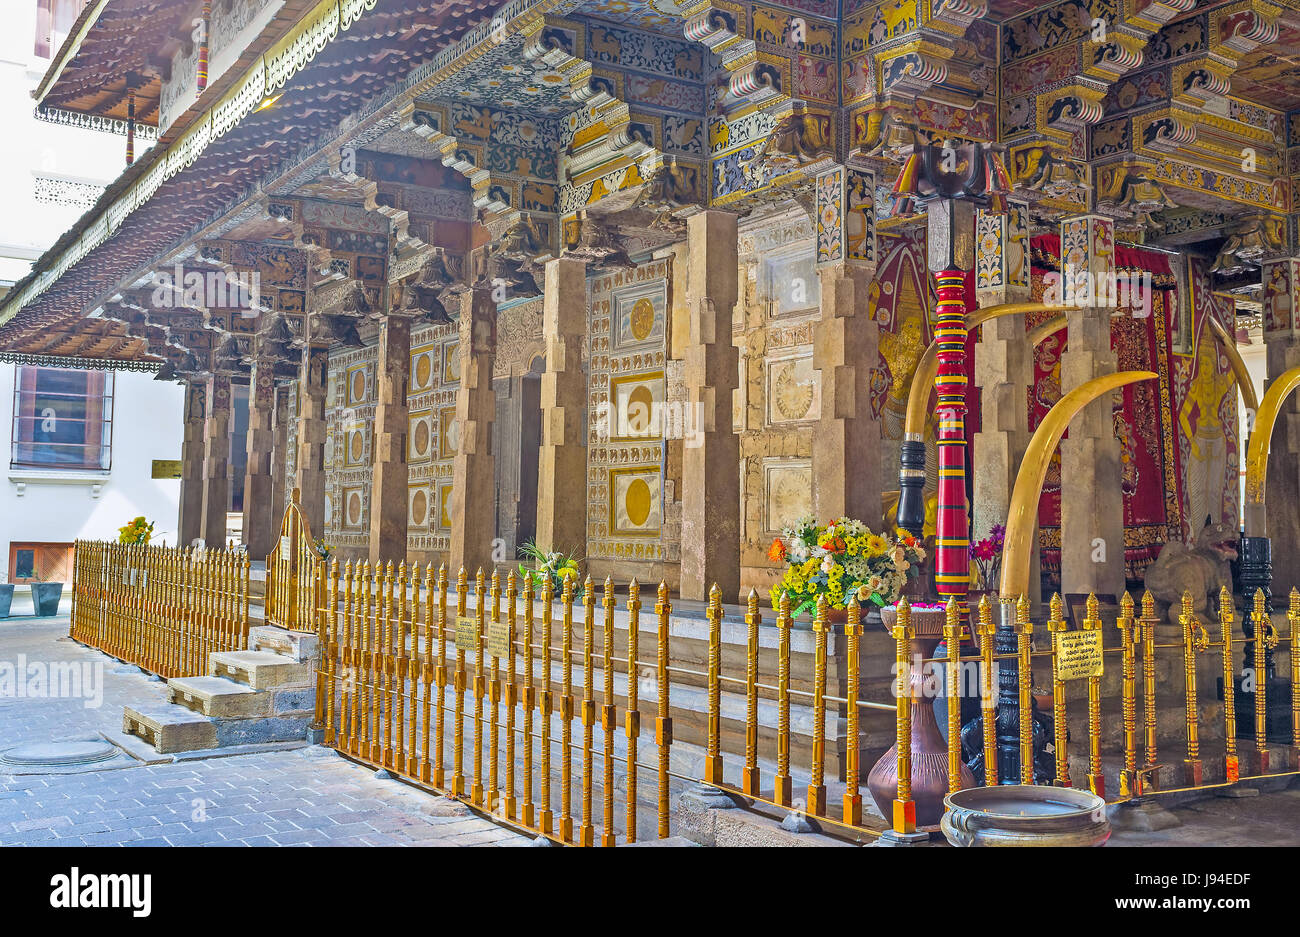 KANDY, SRI LANKA - NOVEMBER 28, 2016: The inner shrine Handun kunama located in the courtyard of Temple of Sacred Tooth, on November 28 in Kandy. Stock Photo